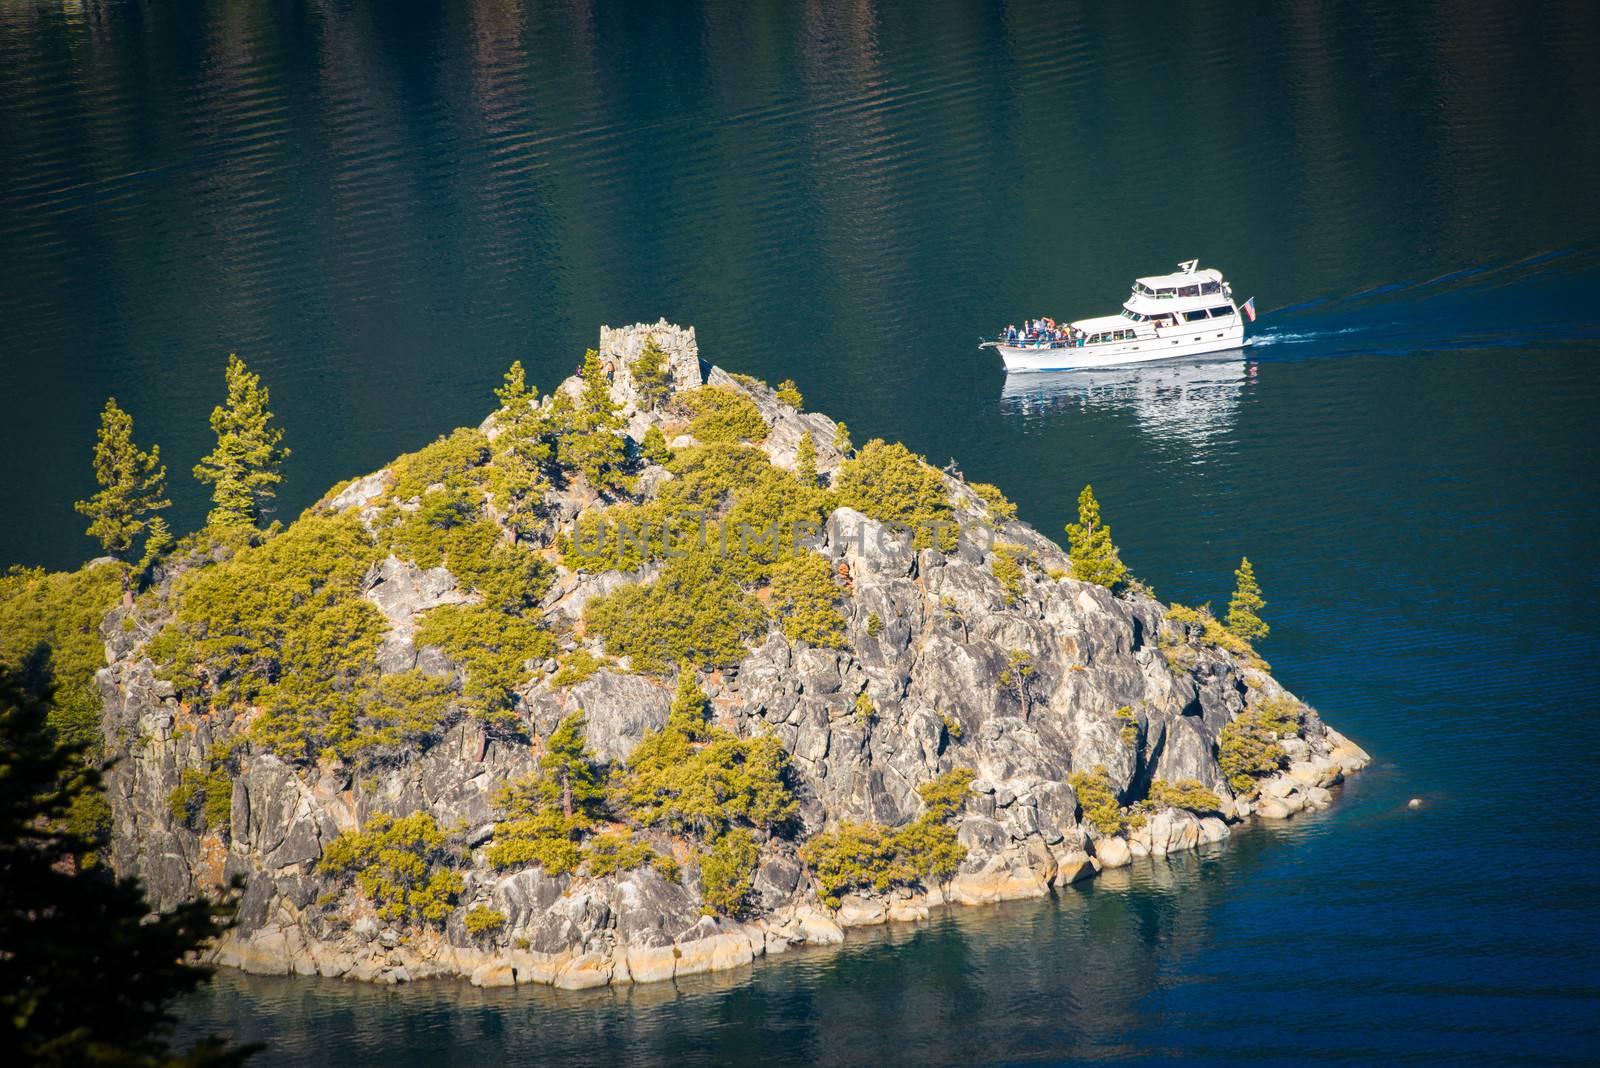 Trees on an island in a lake, Emerald Bay, Lake Tahoe, California, USA